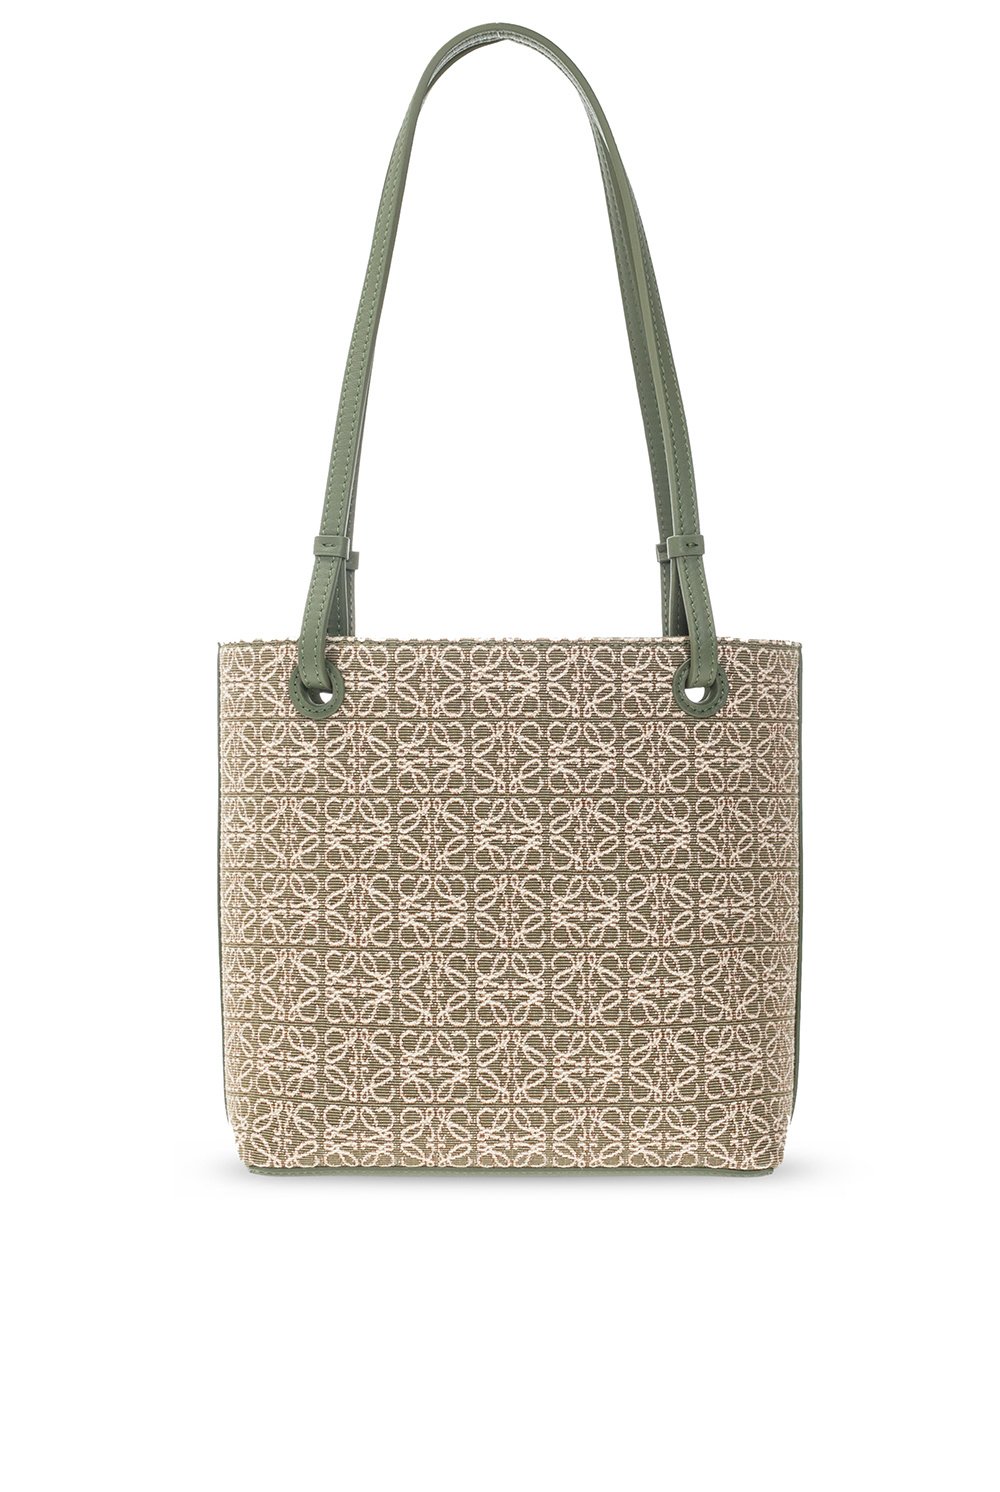 Loewe ‘Square’ handbag